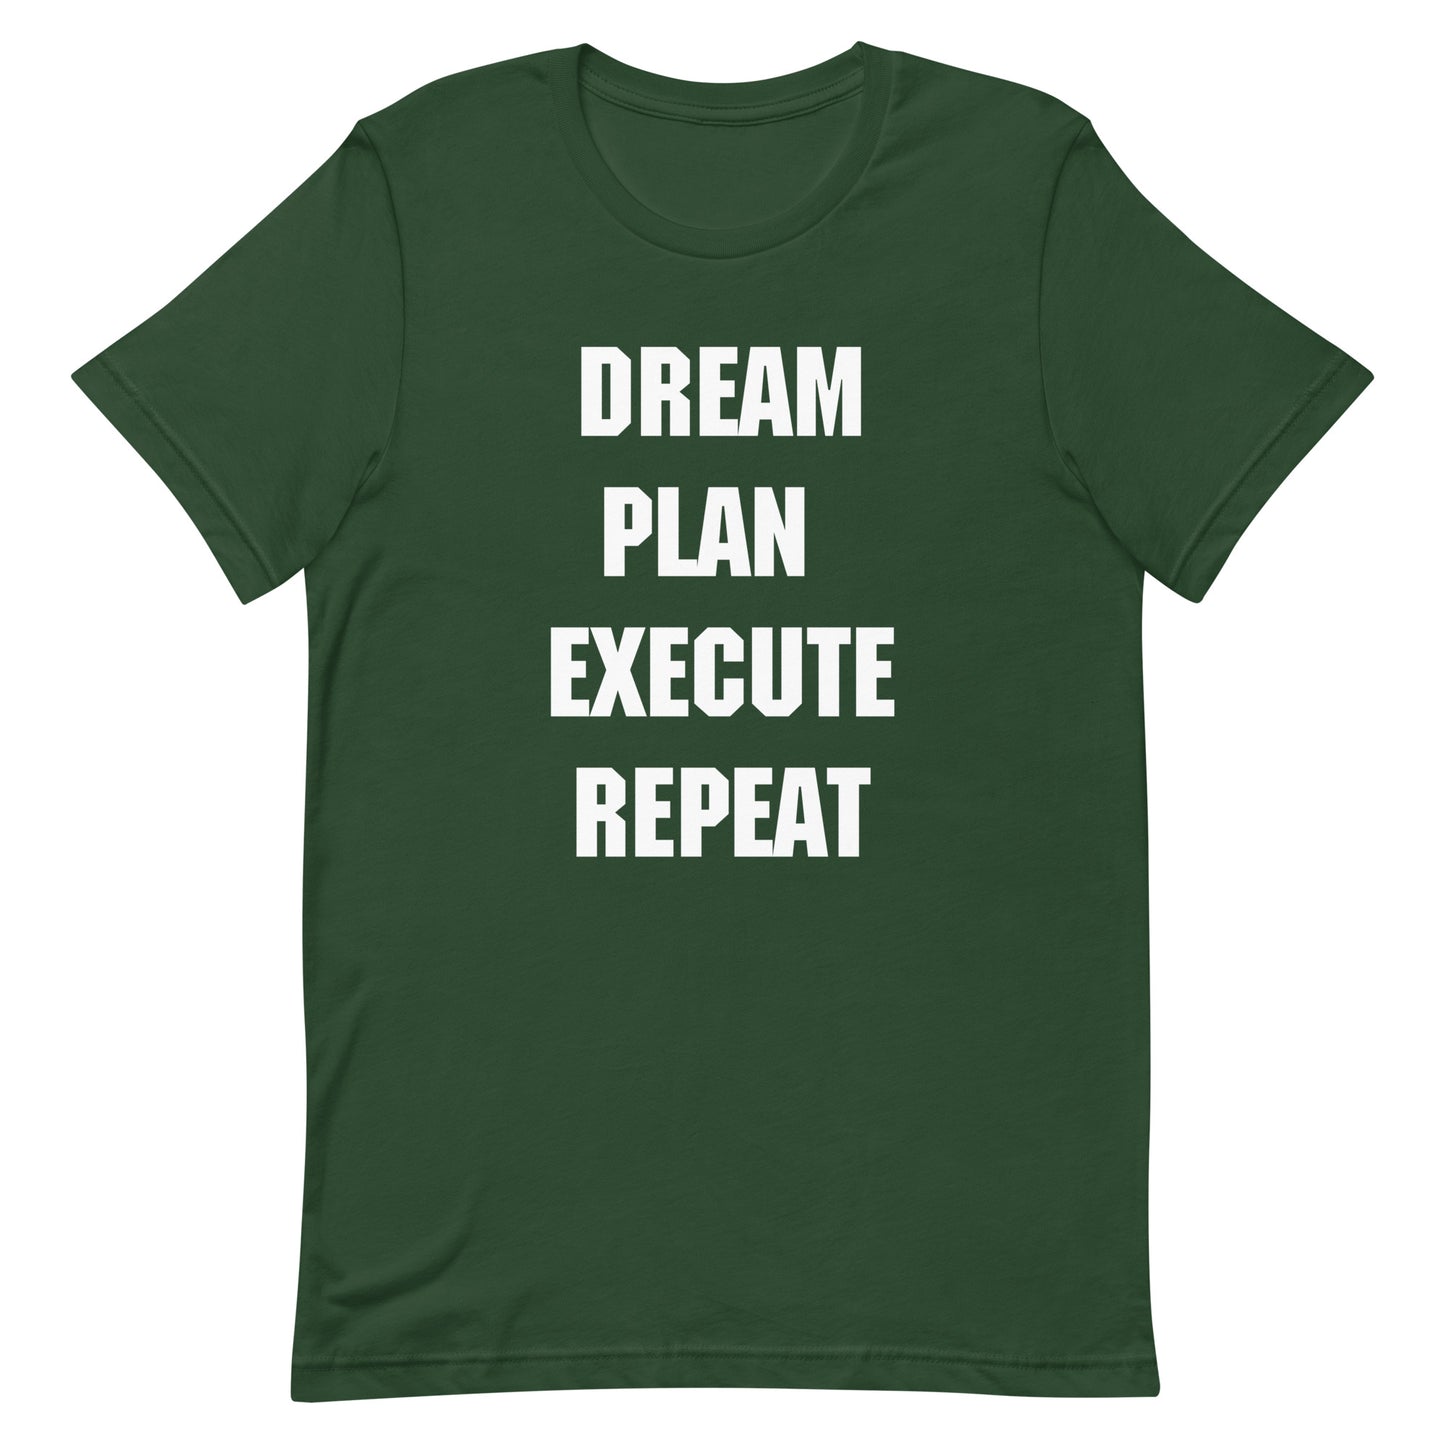 Dream. Plan. Execute. Repeat